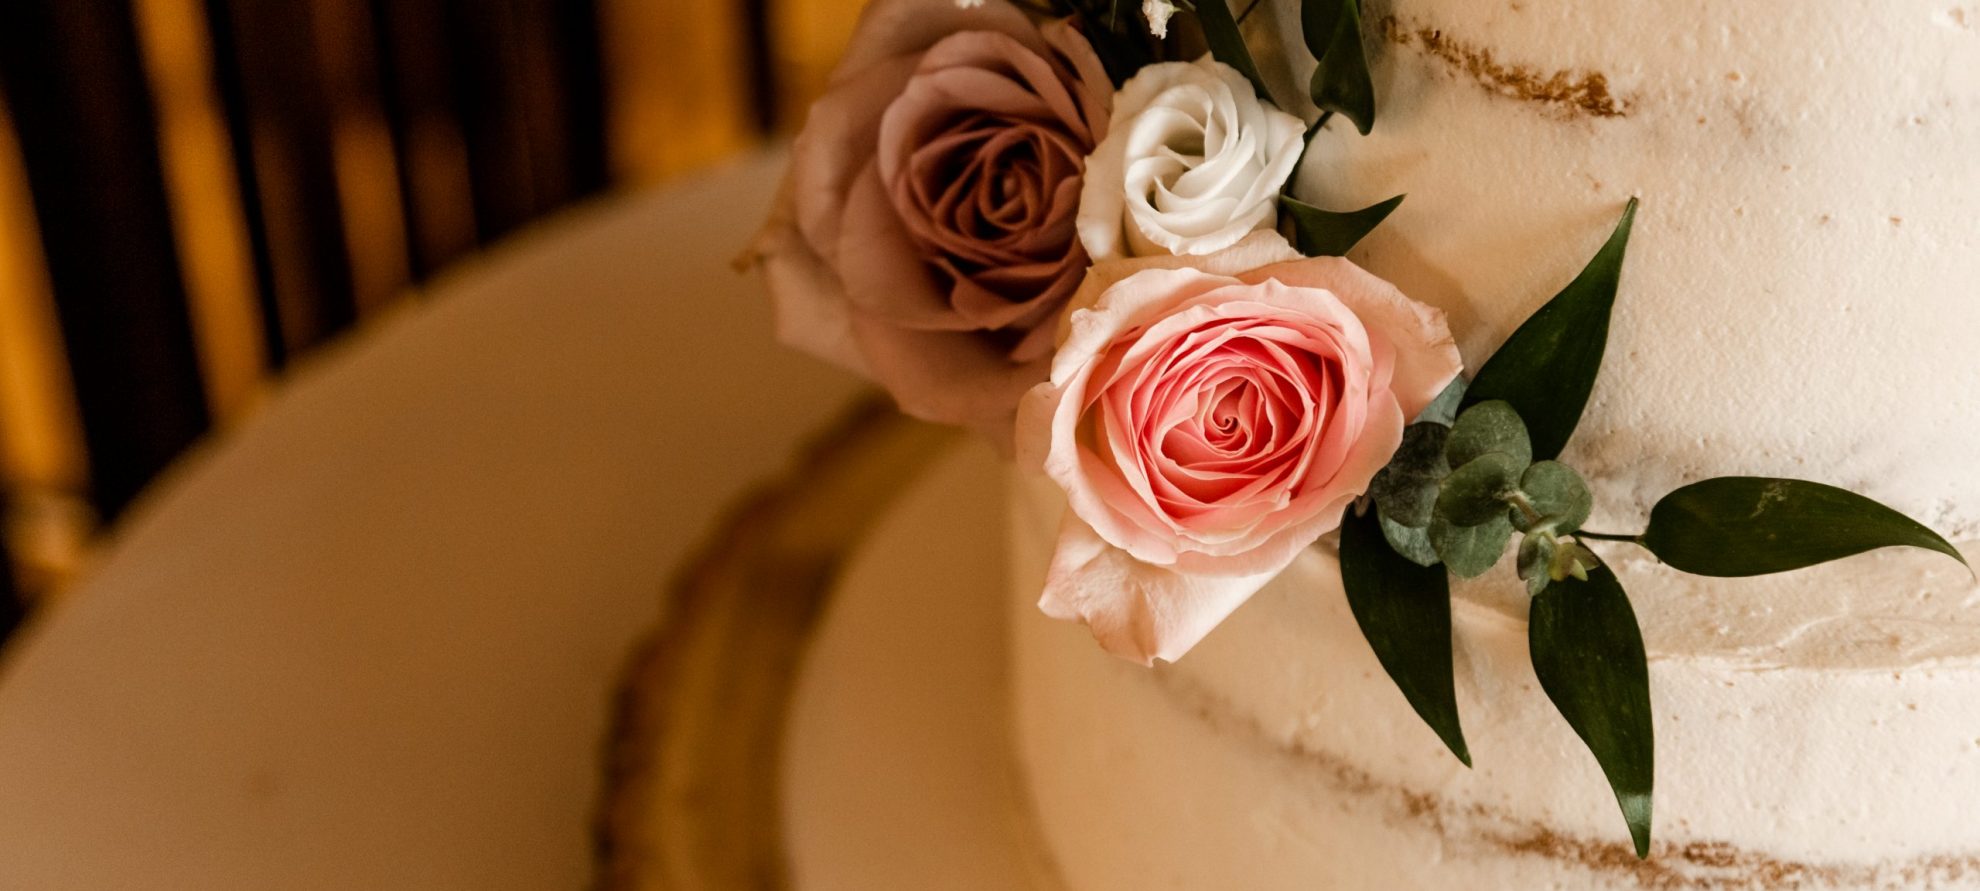 Isabelle Biggs Photography - Flowers on Wedding Cake - Jason & Rebecca